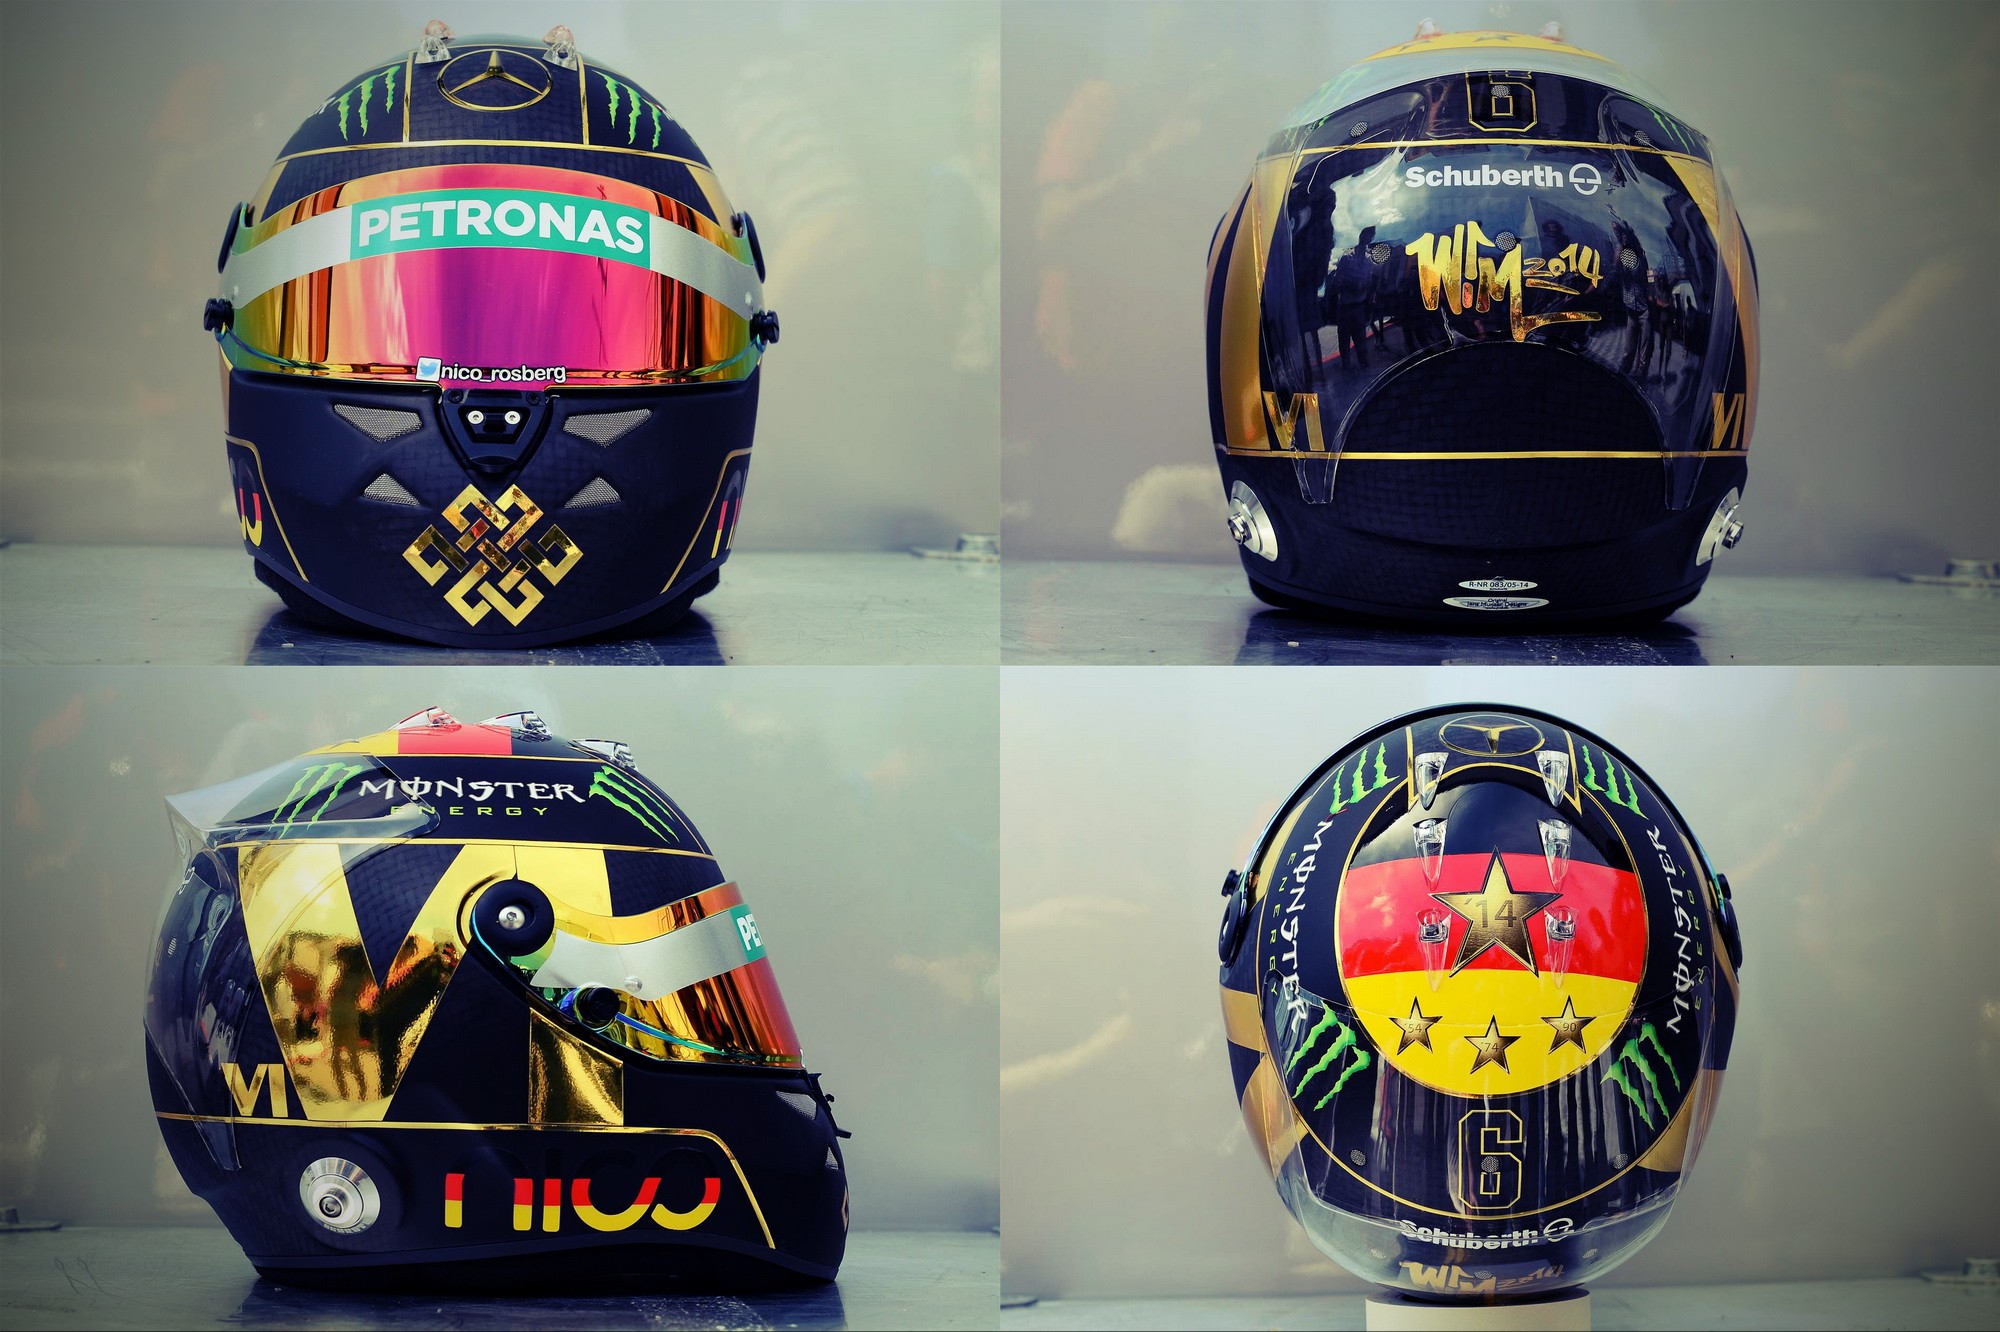 Шлем Нико Росберга на Гран-При Германии 2014 года | 2014 German Grand Prix helmet of Nico Rosberg